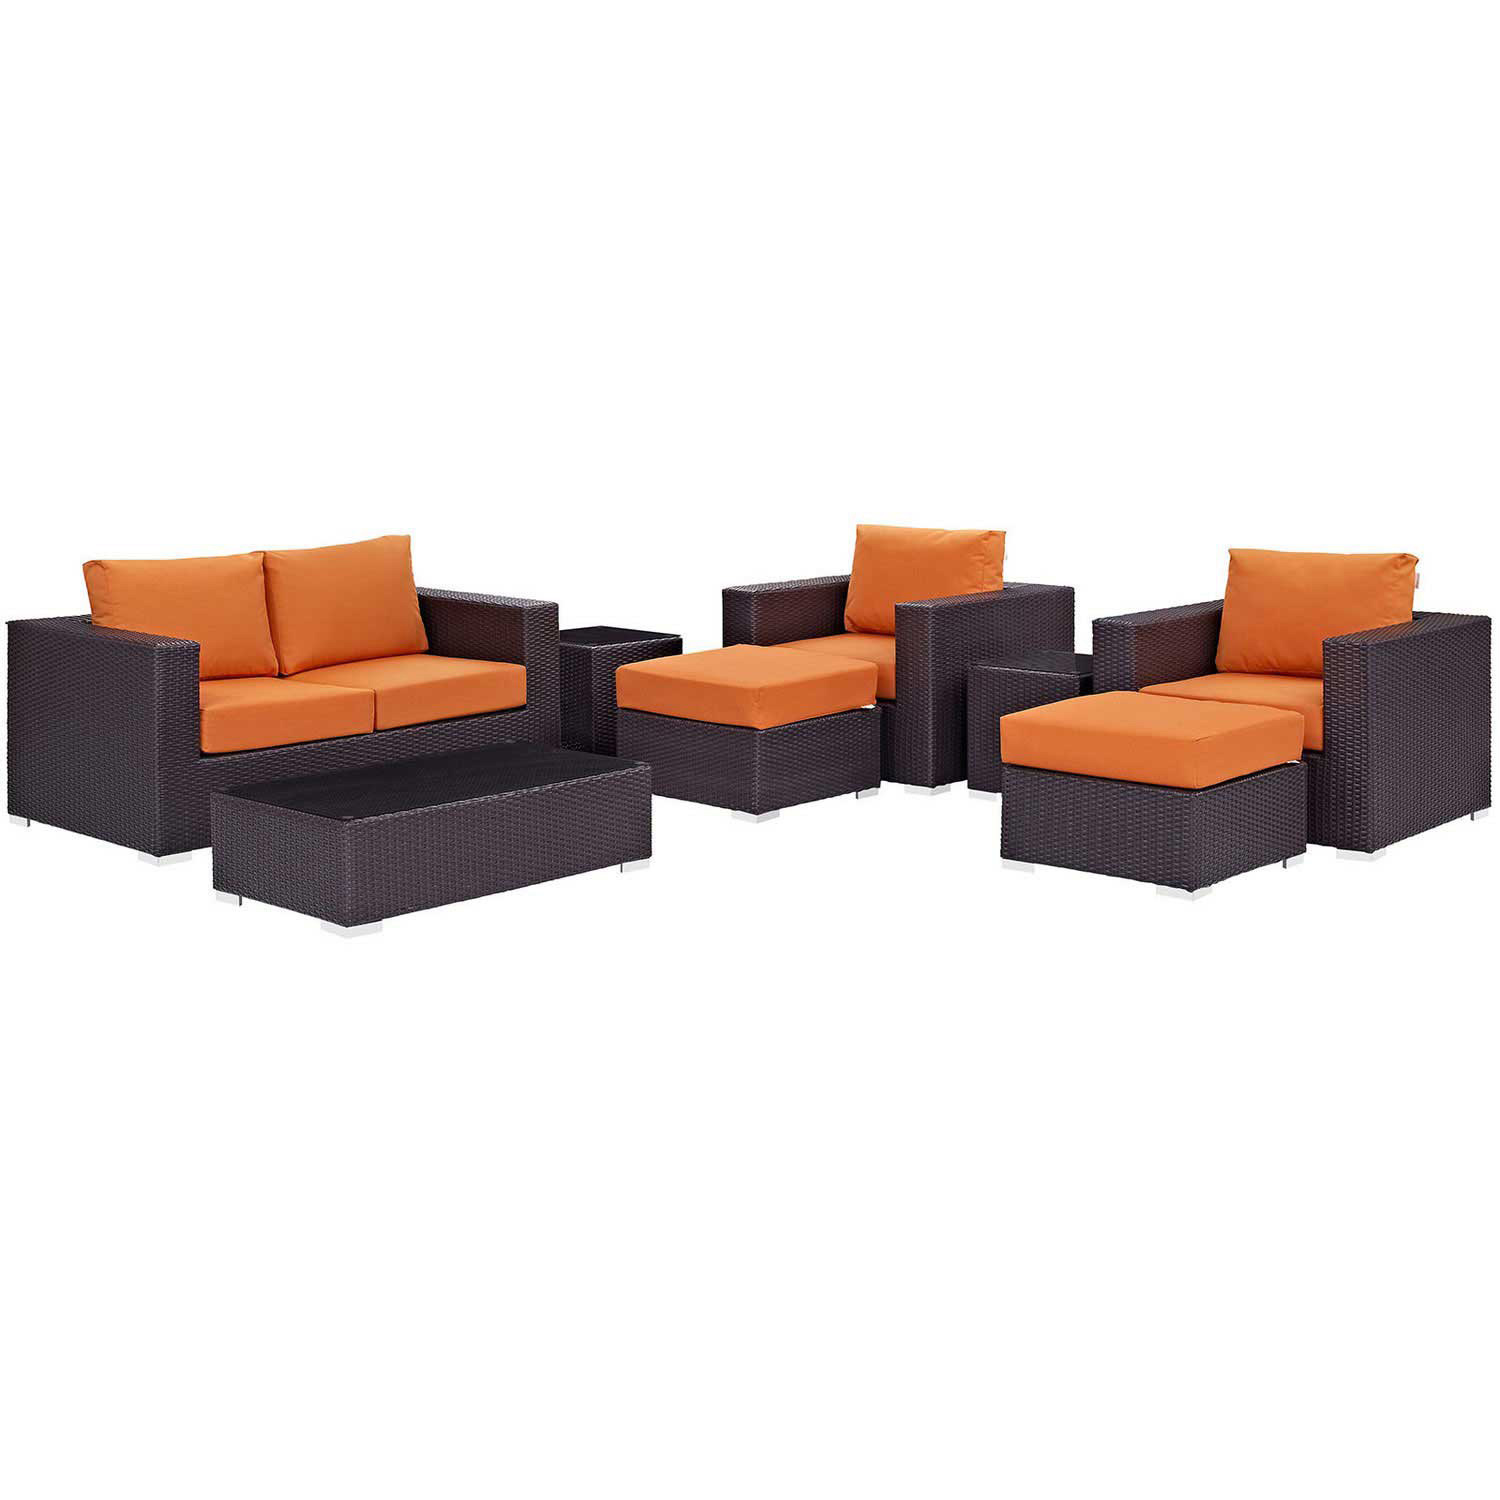 Modway Convene 8 Piece Outdoor Patio Sofa Set - Espresso Orange